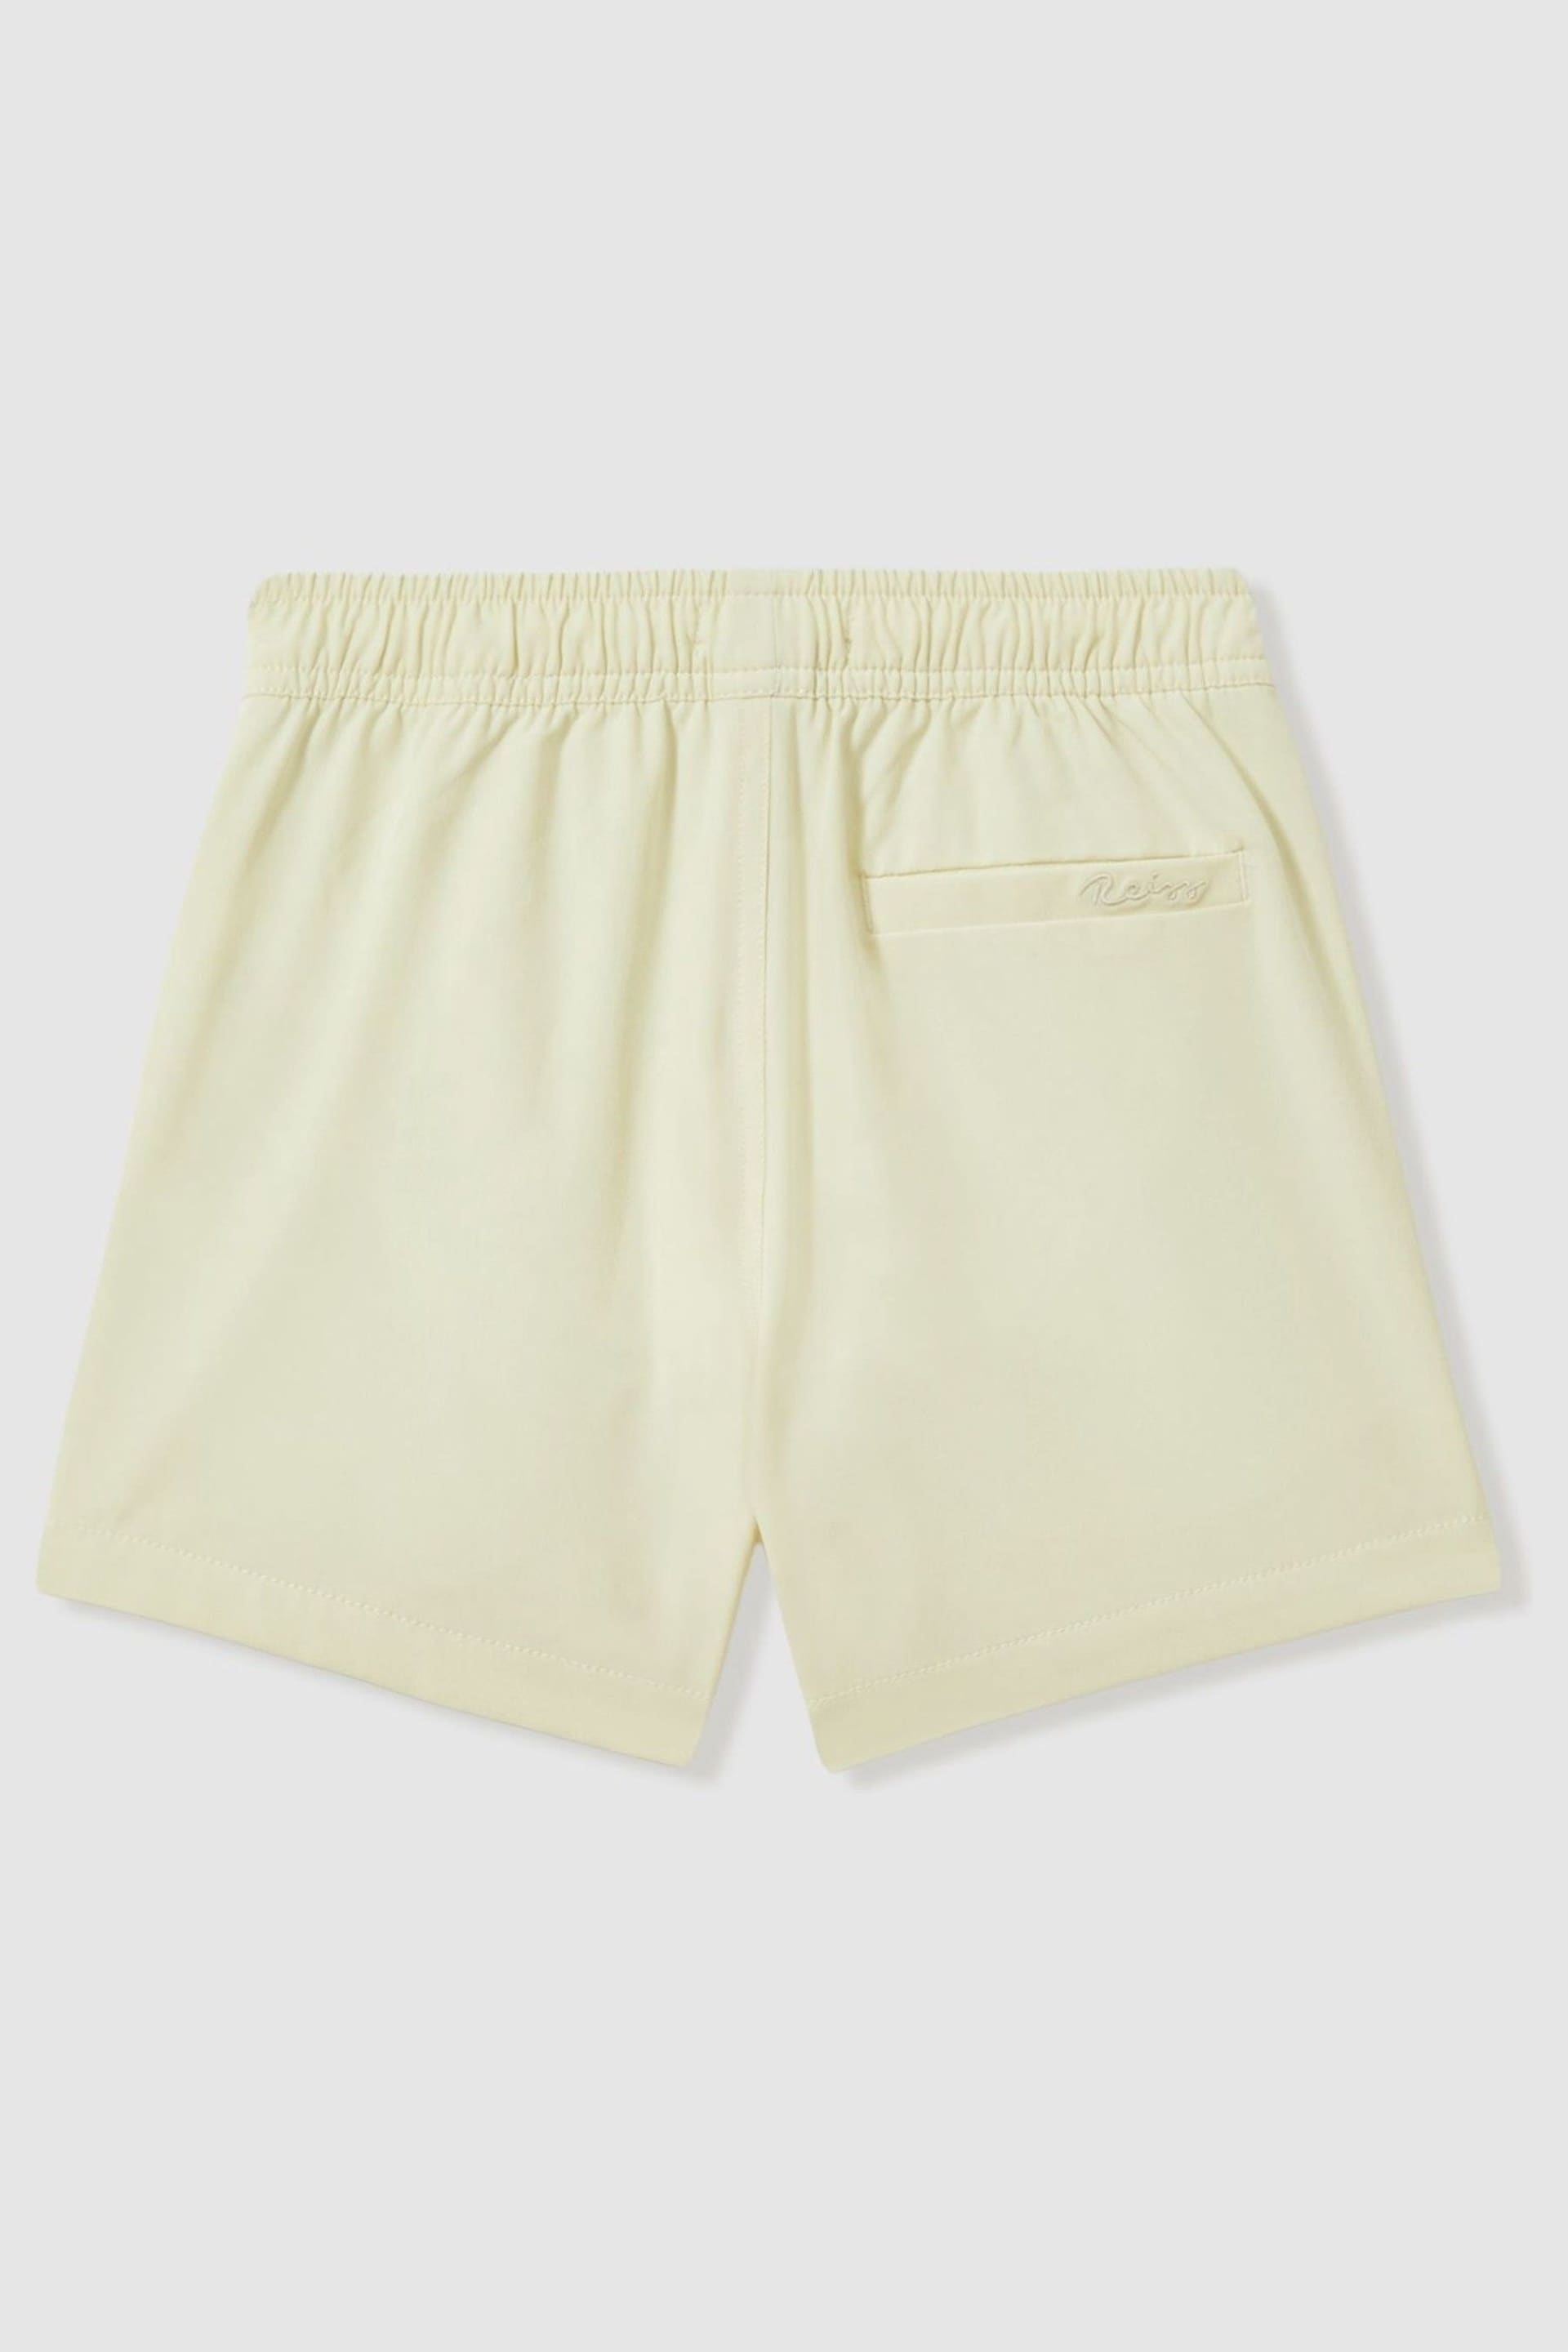 Reiss Lemon Shore Junior Plain Drawstring Waist Swim Shorts - Image 2 of 3